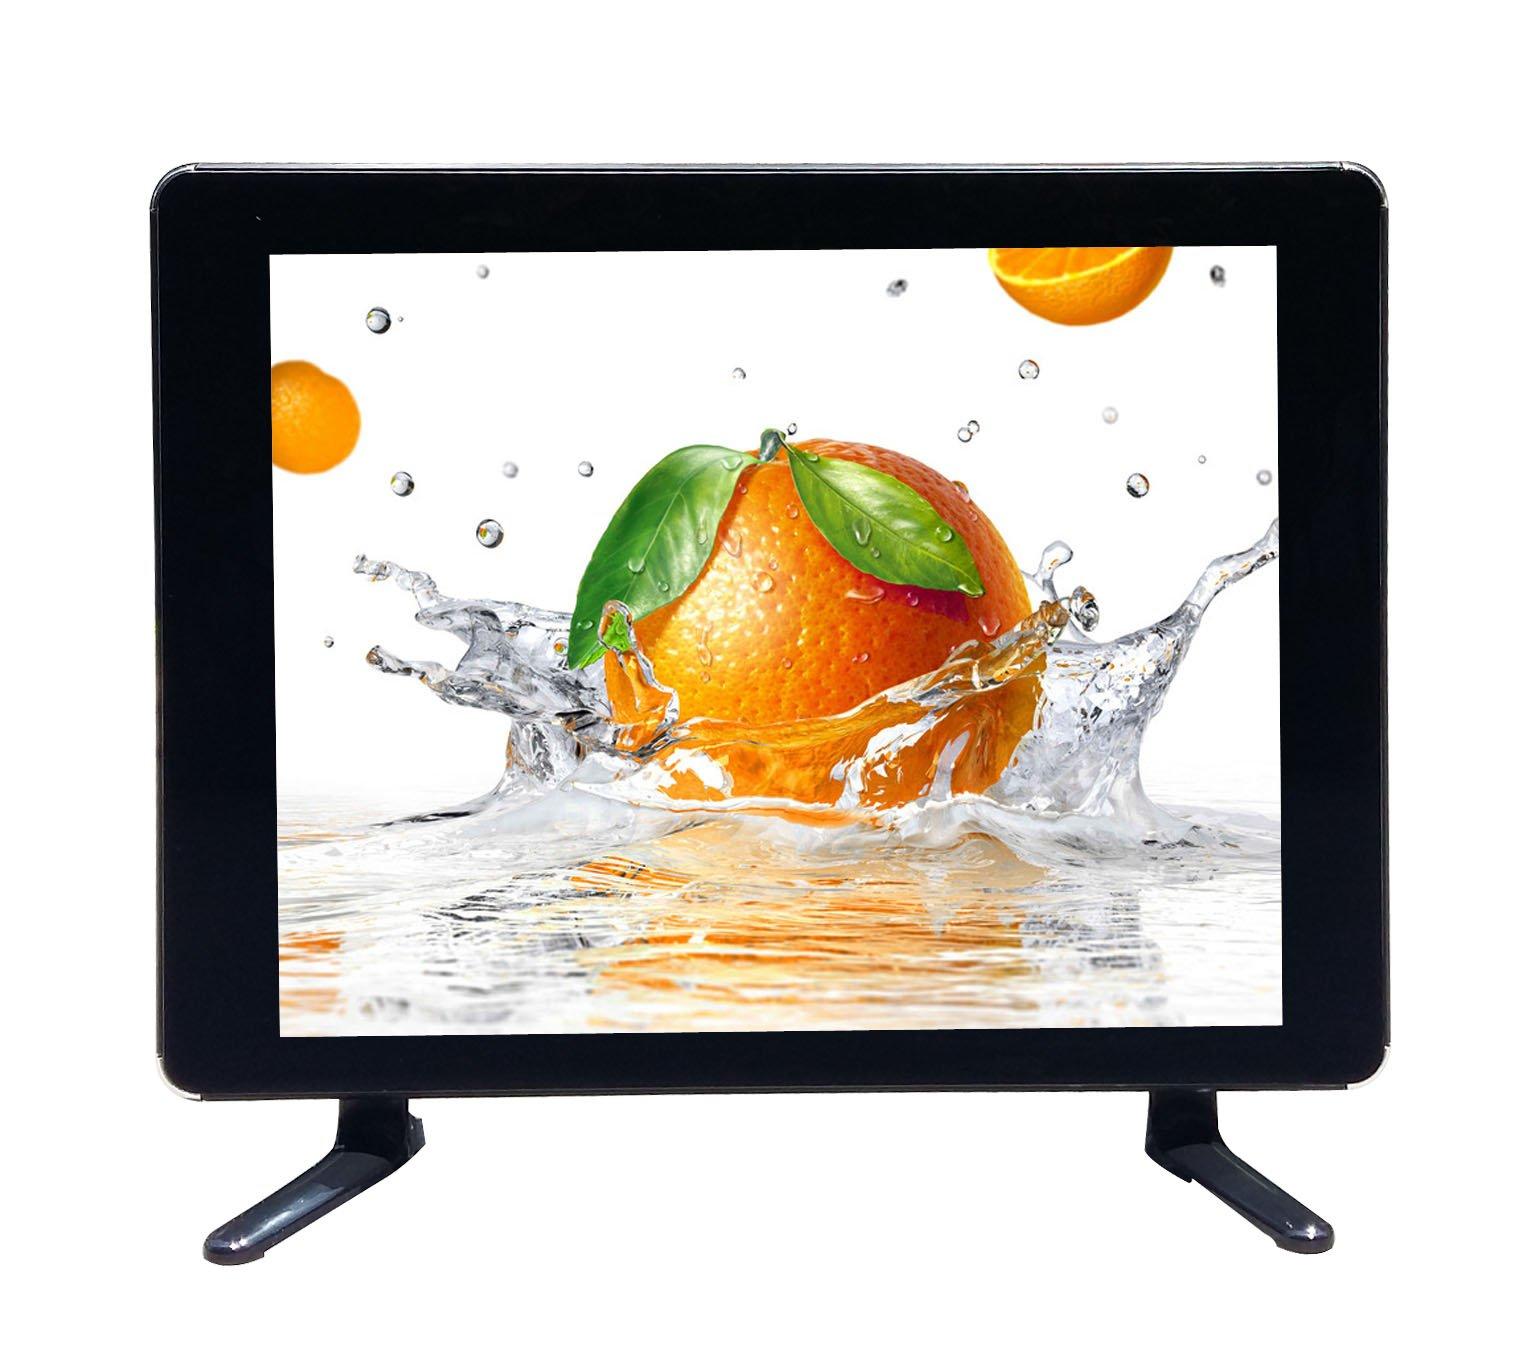 Hot 17 inch flat screen tv tvoem Xinyao LCD Brand